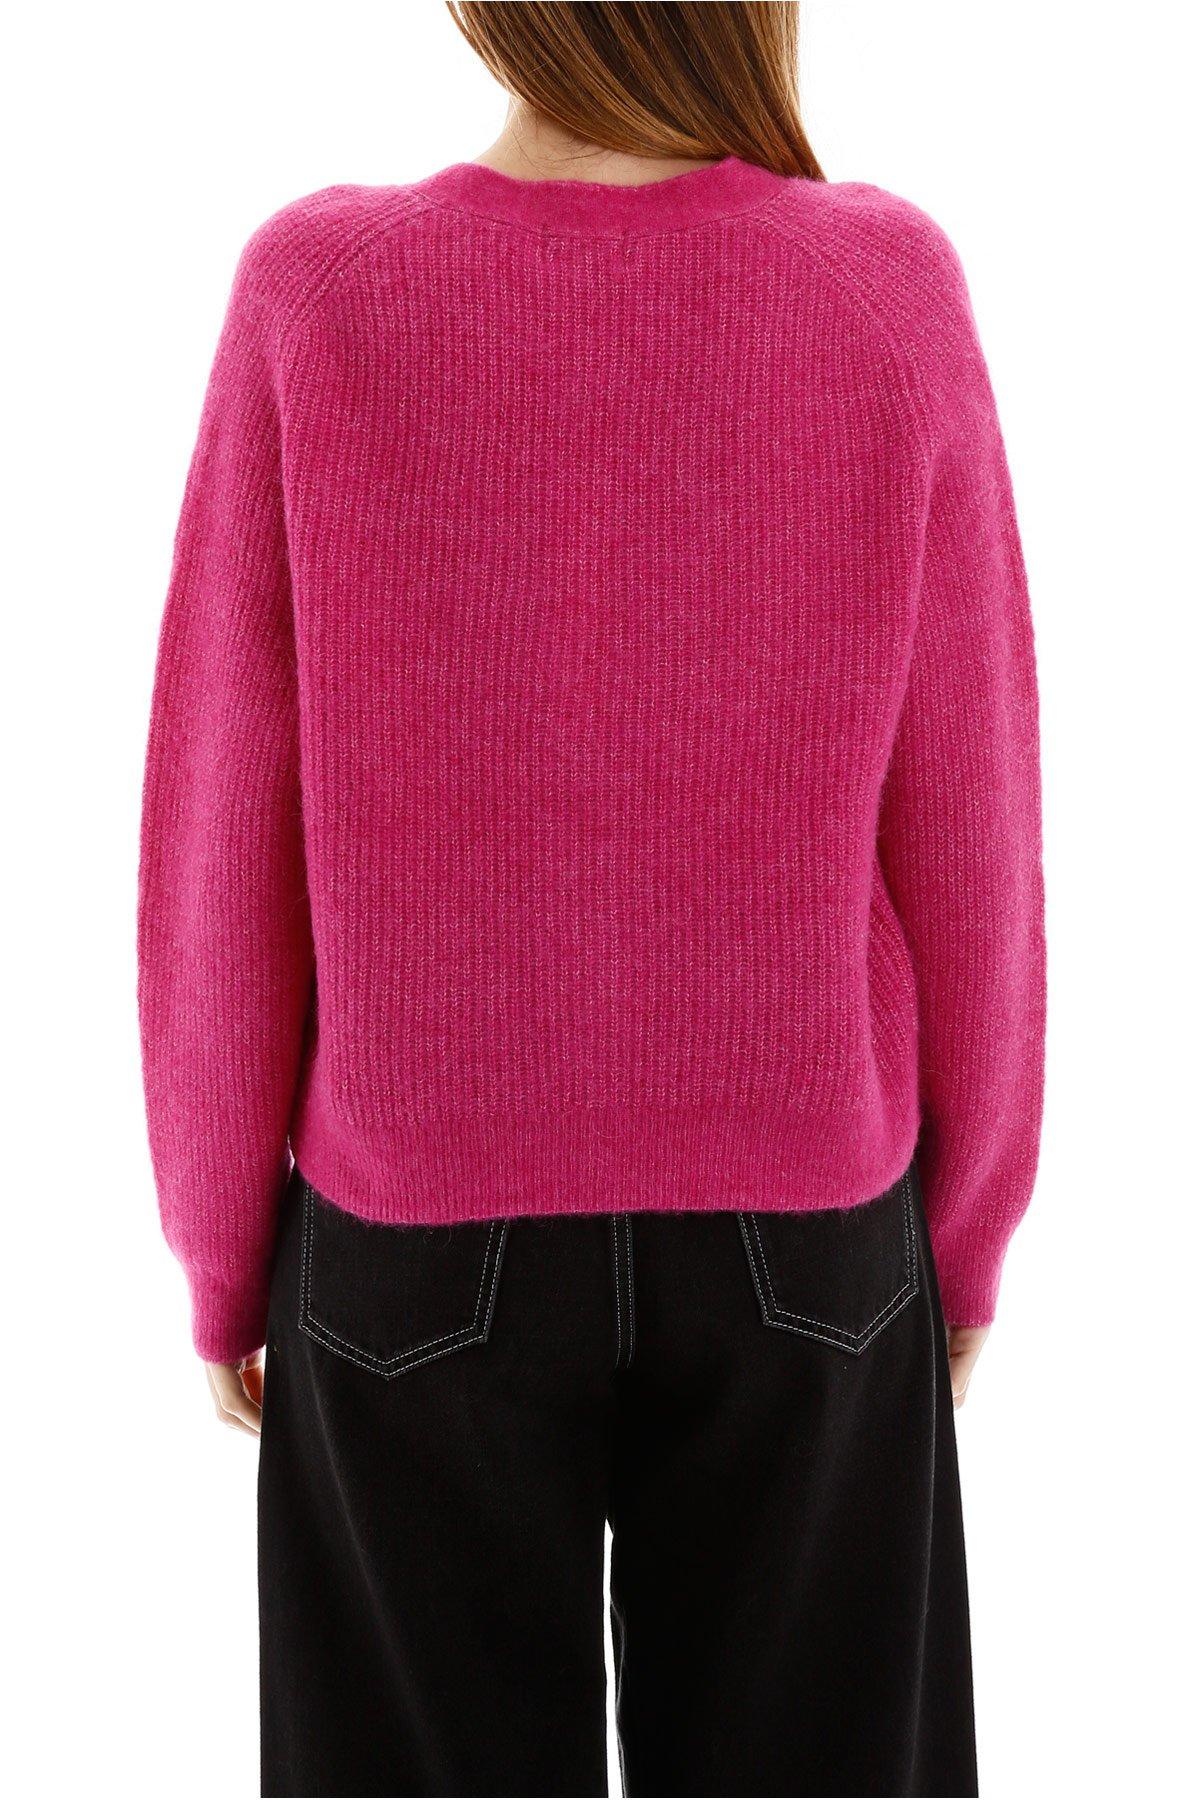 Ganni Wool Ribbed Knitted Cardigan in Fuchsia (Pink) - Lyst